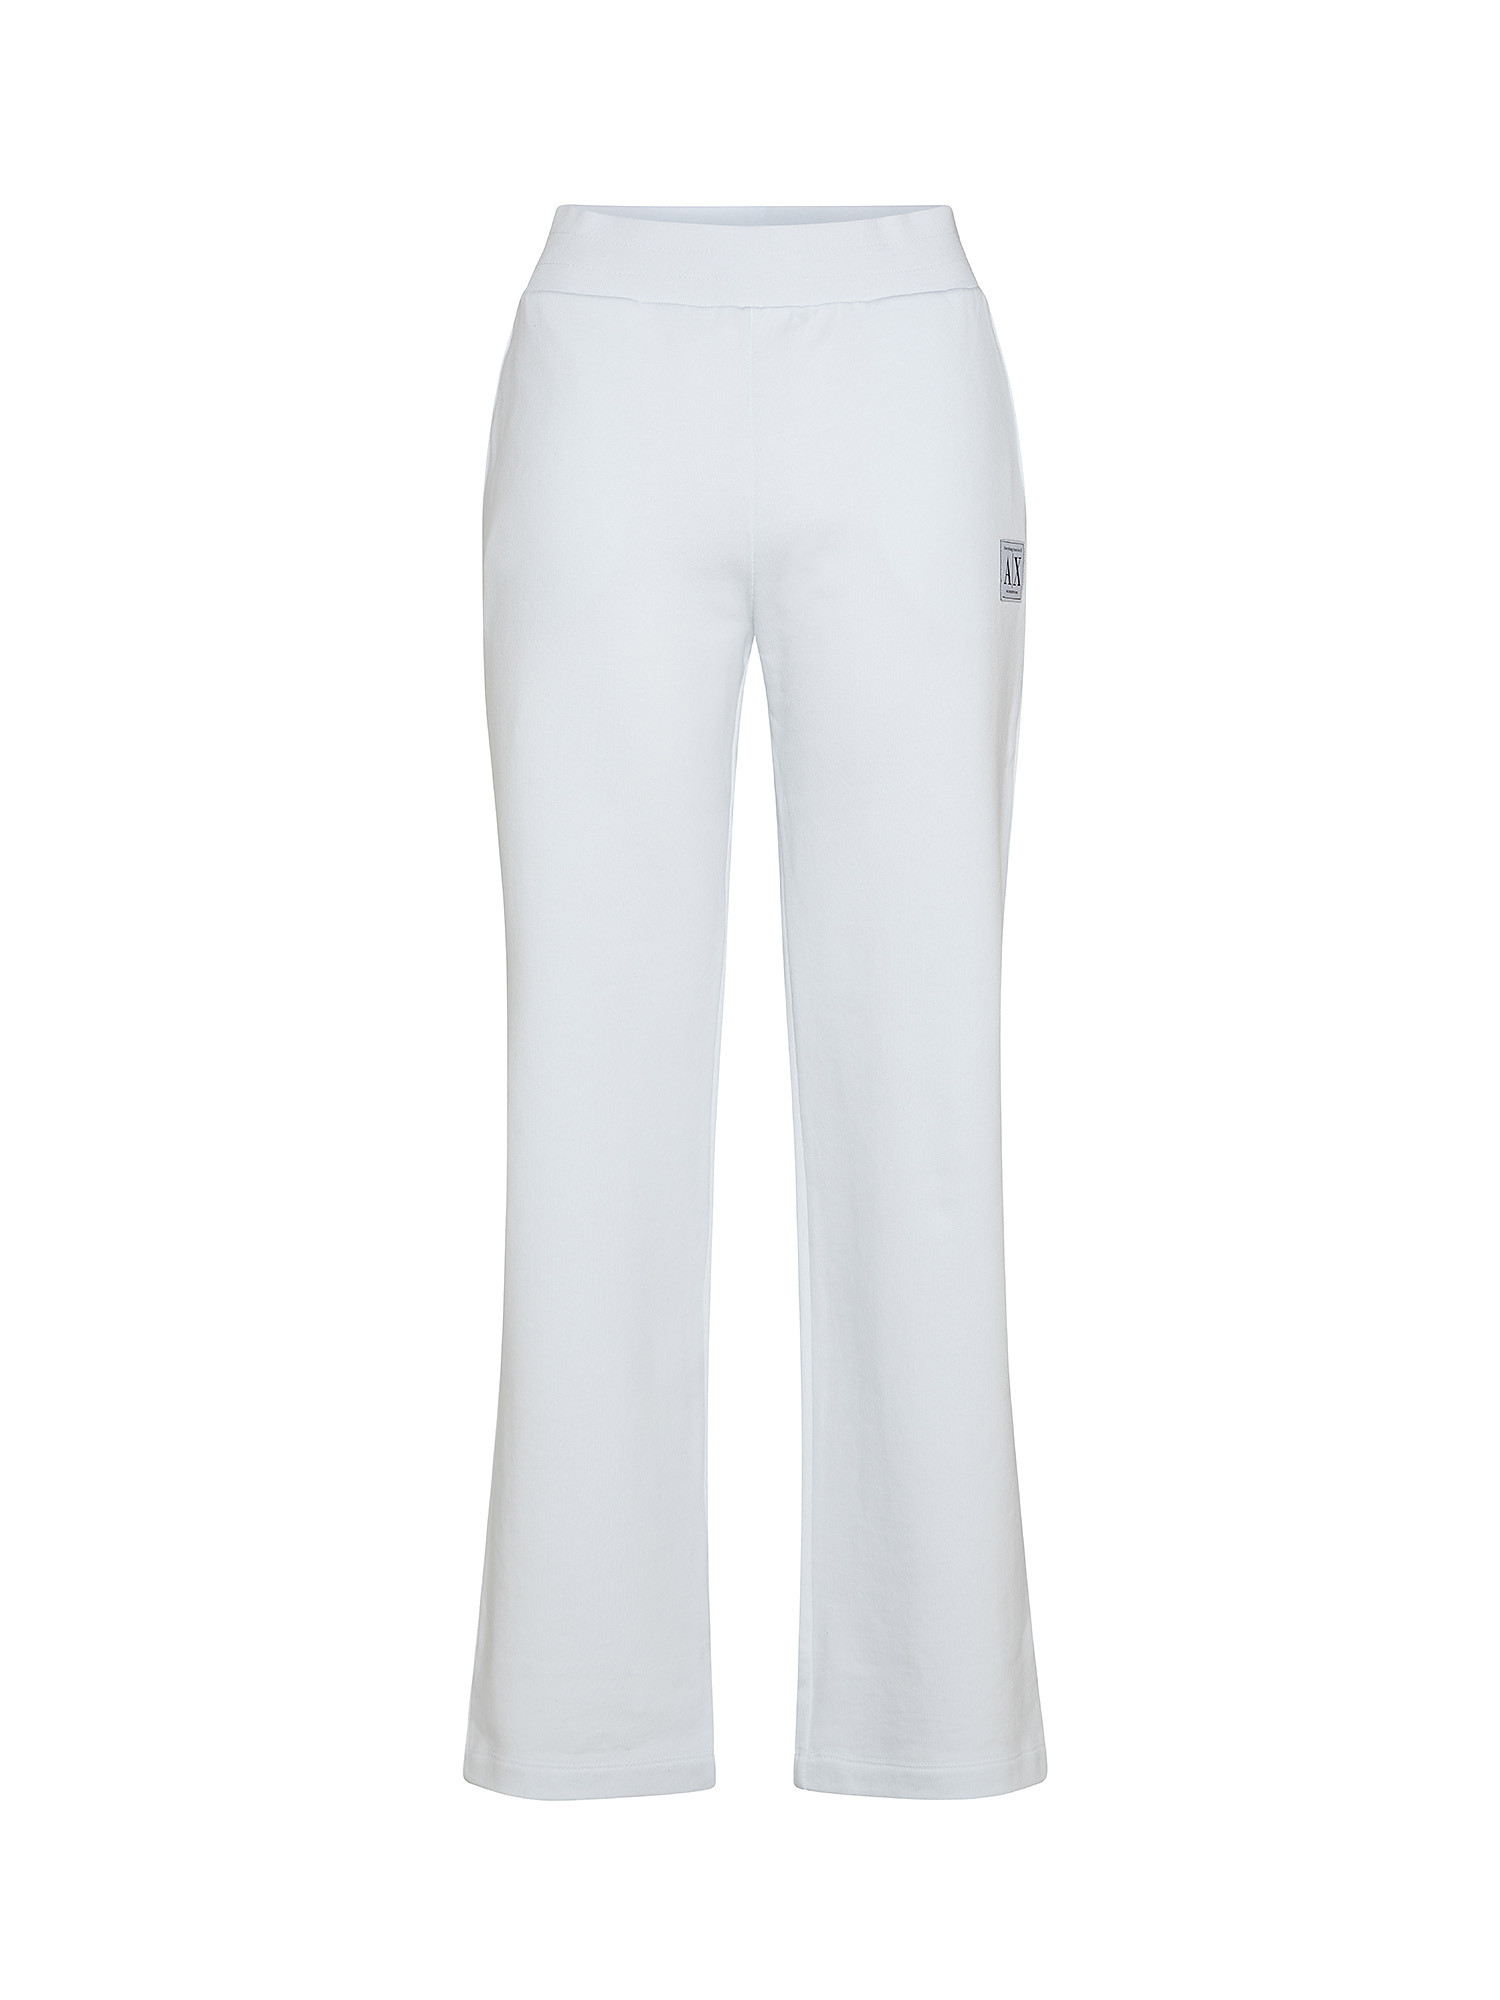 Pantalone, Bianco, large image number 0